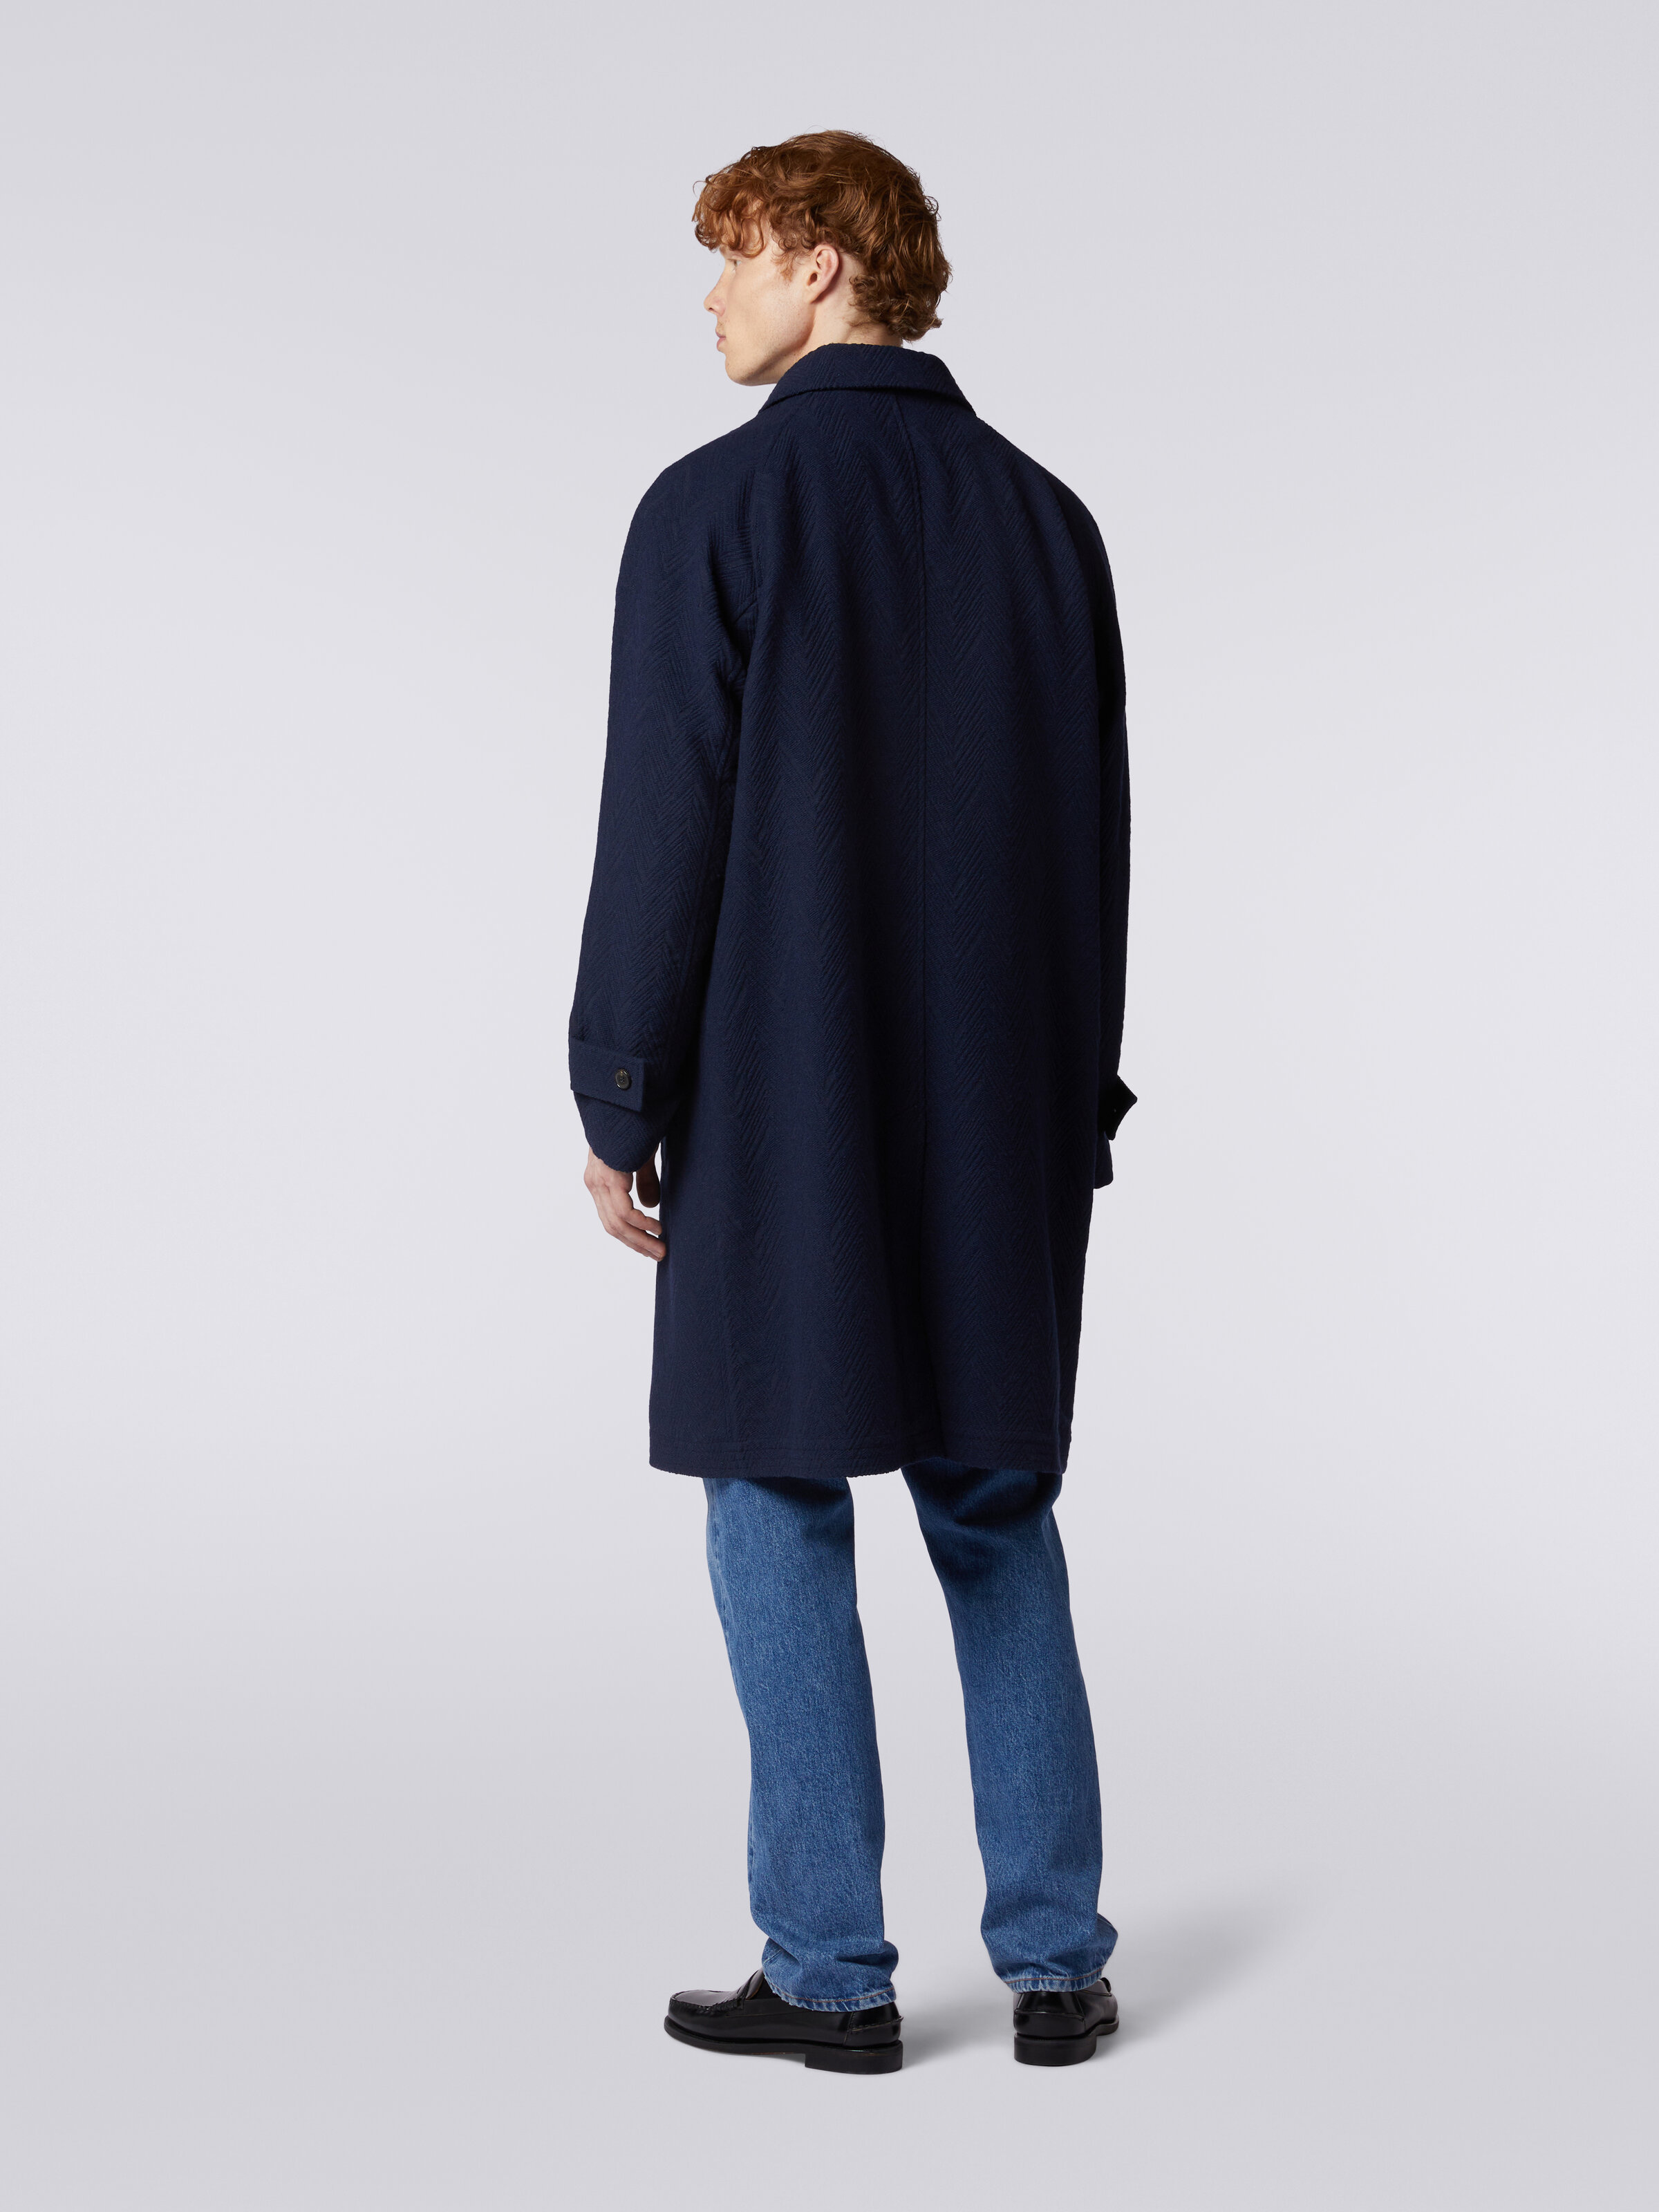 Jacquard wool blend coat with zigzag pattern, Dark Blue - 3